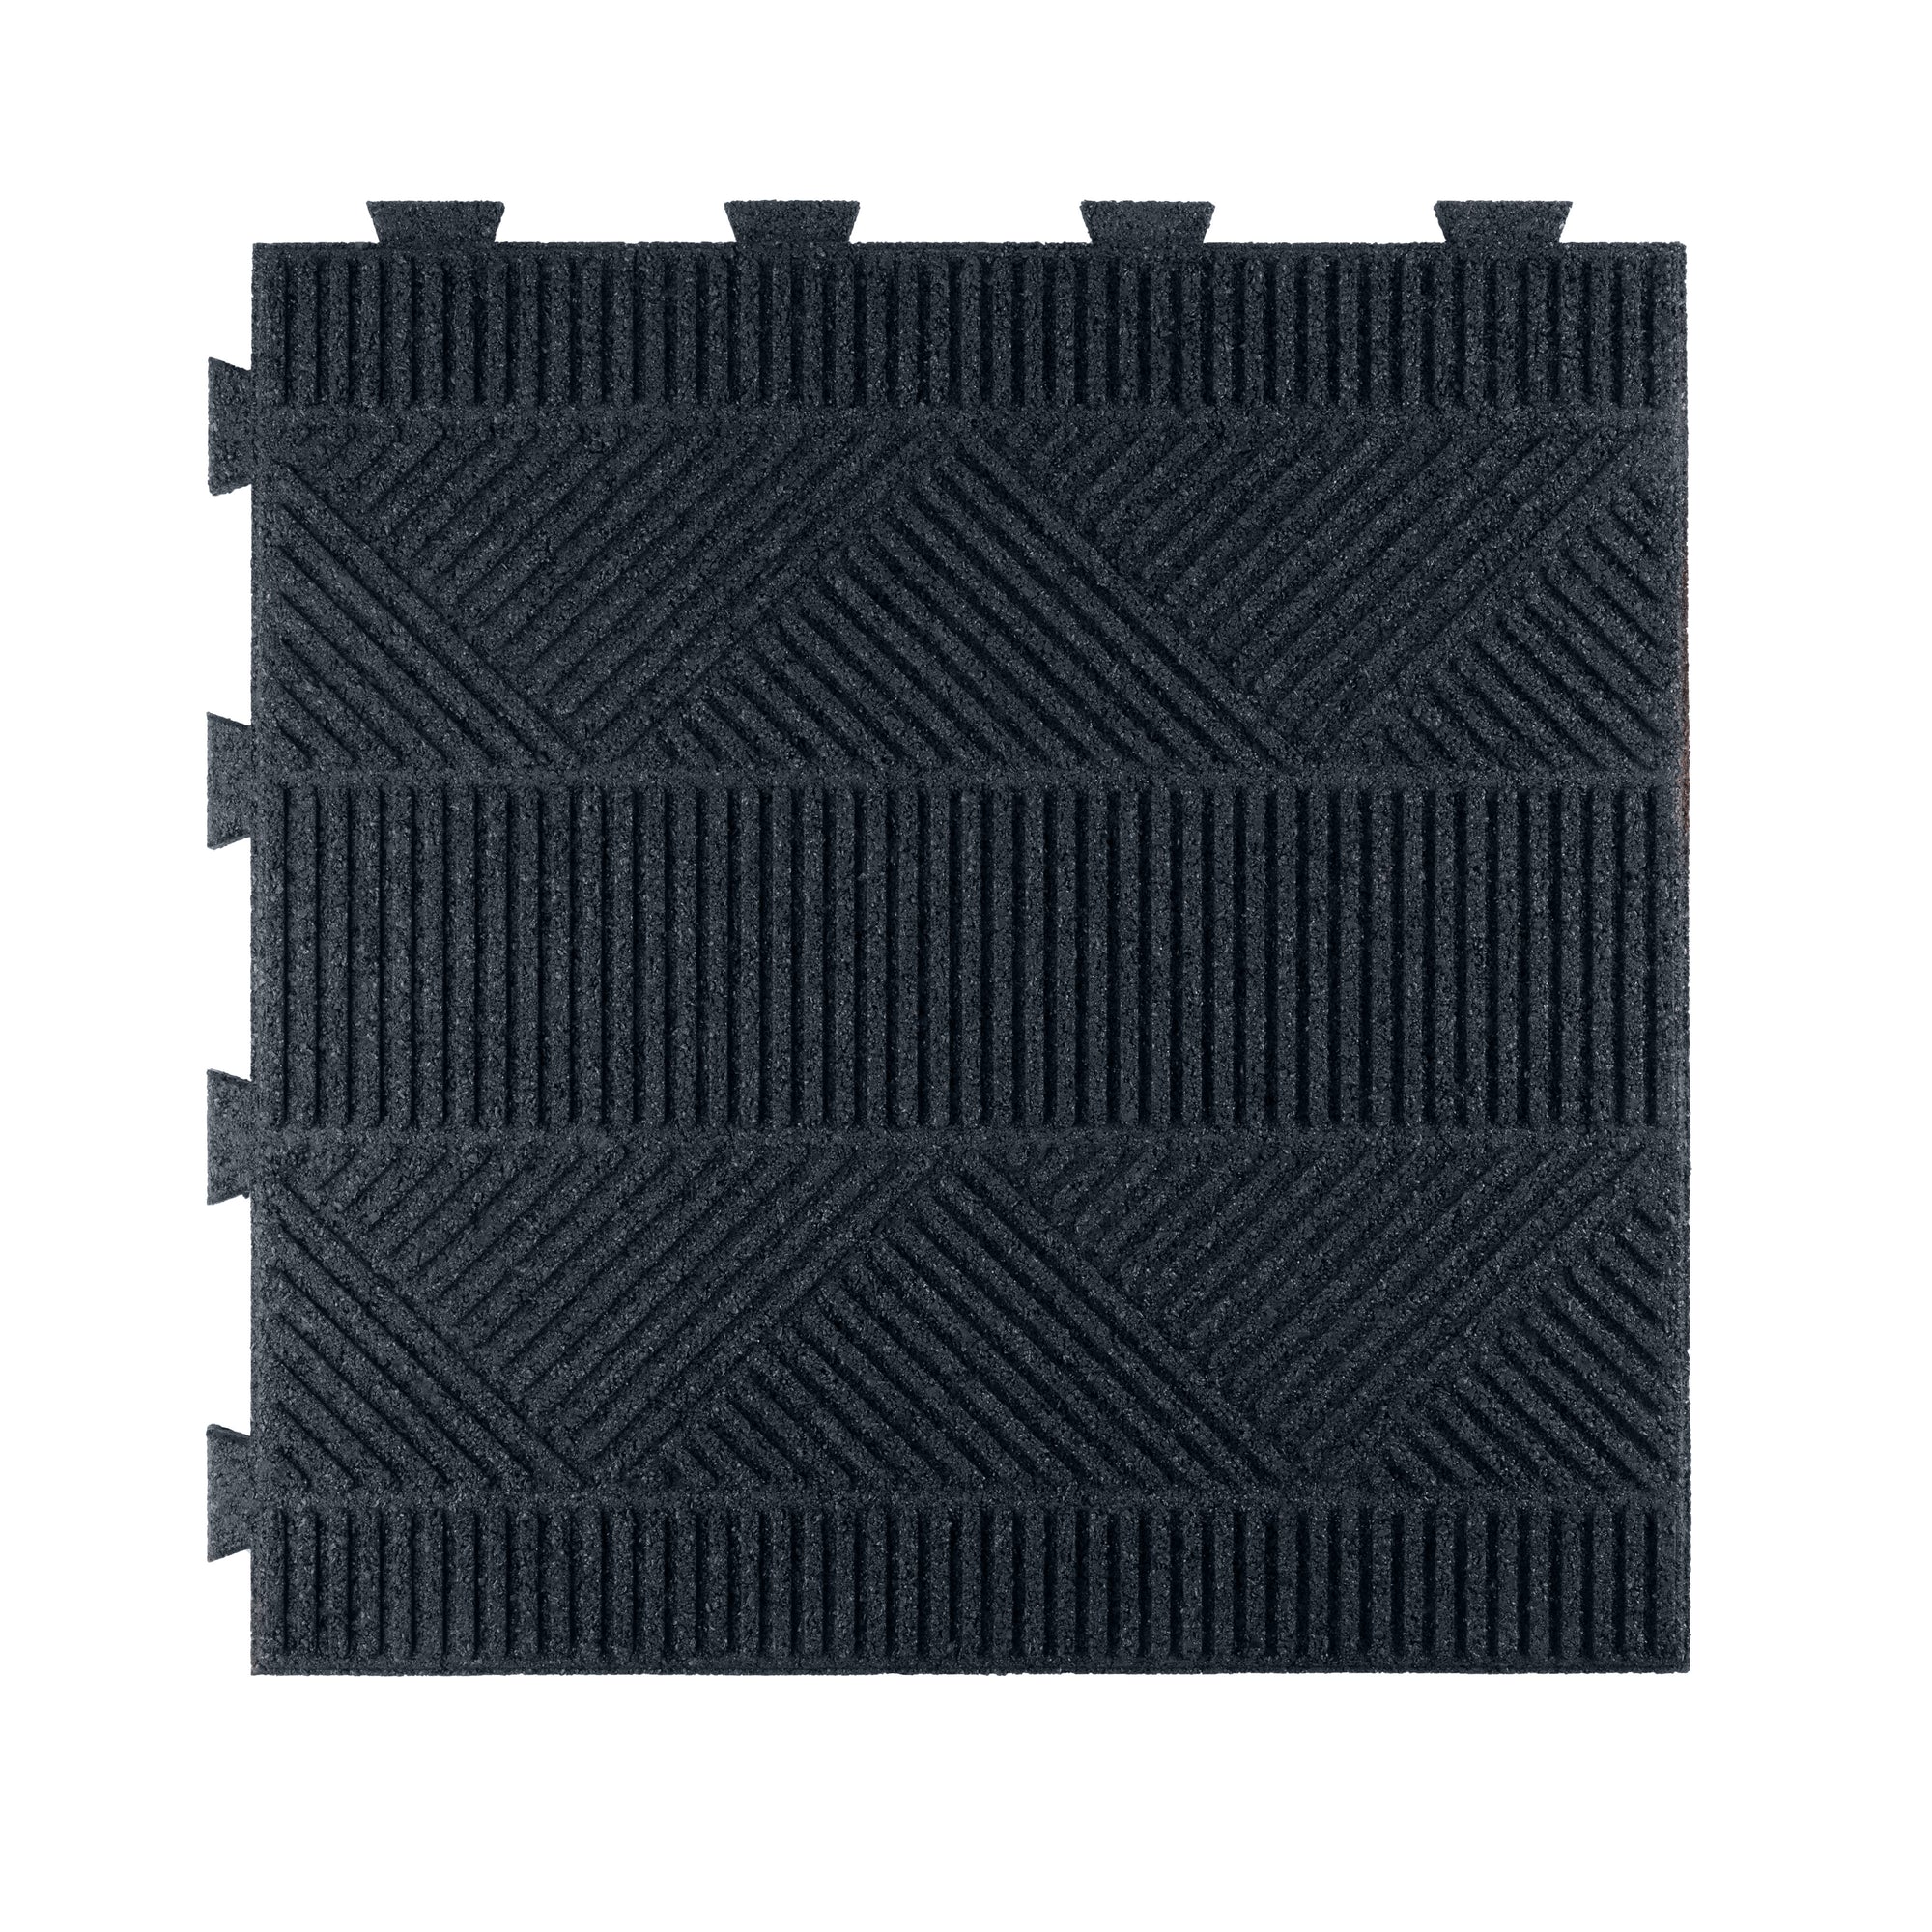 Dimensional Interlocking Rubber Paver Tile